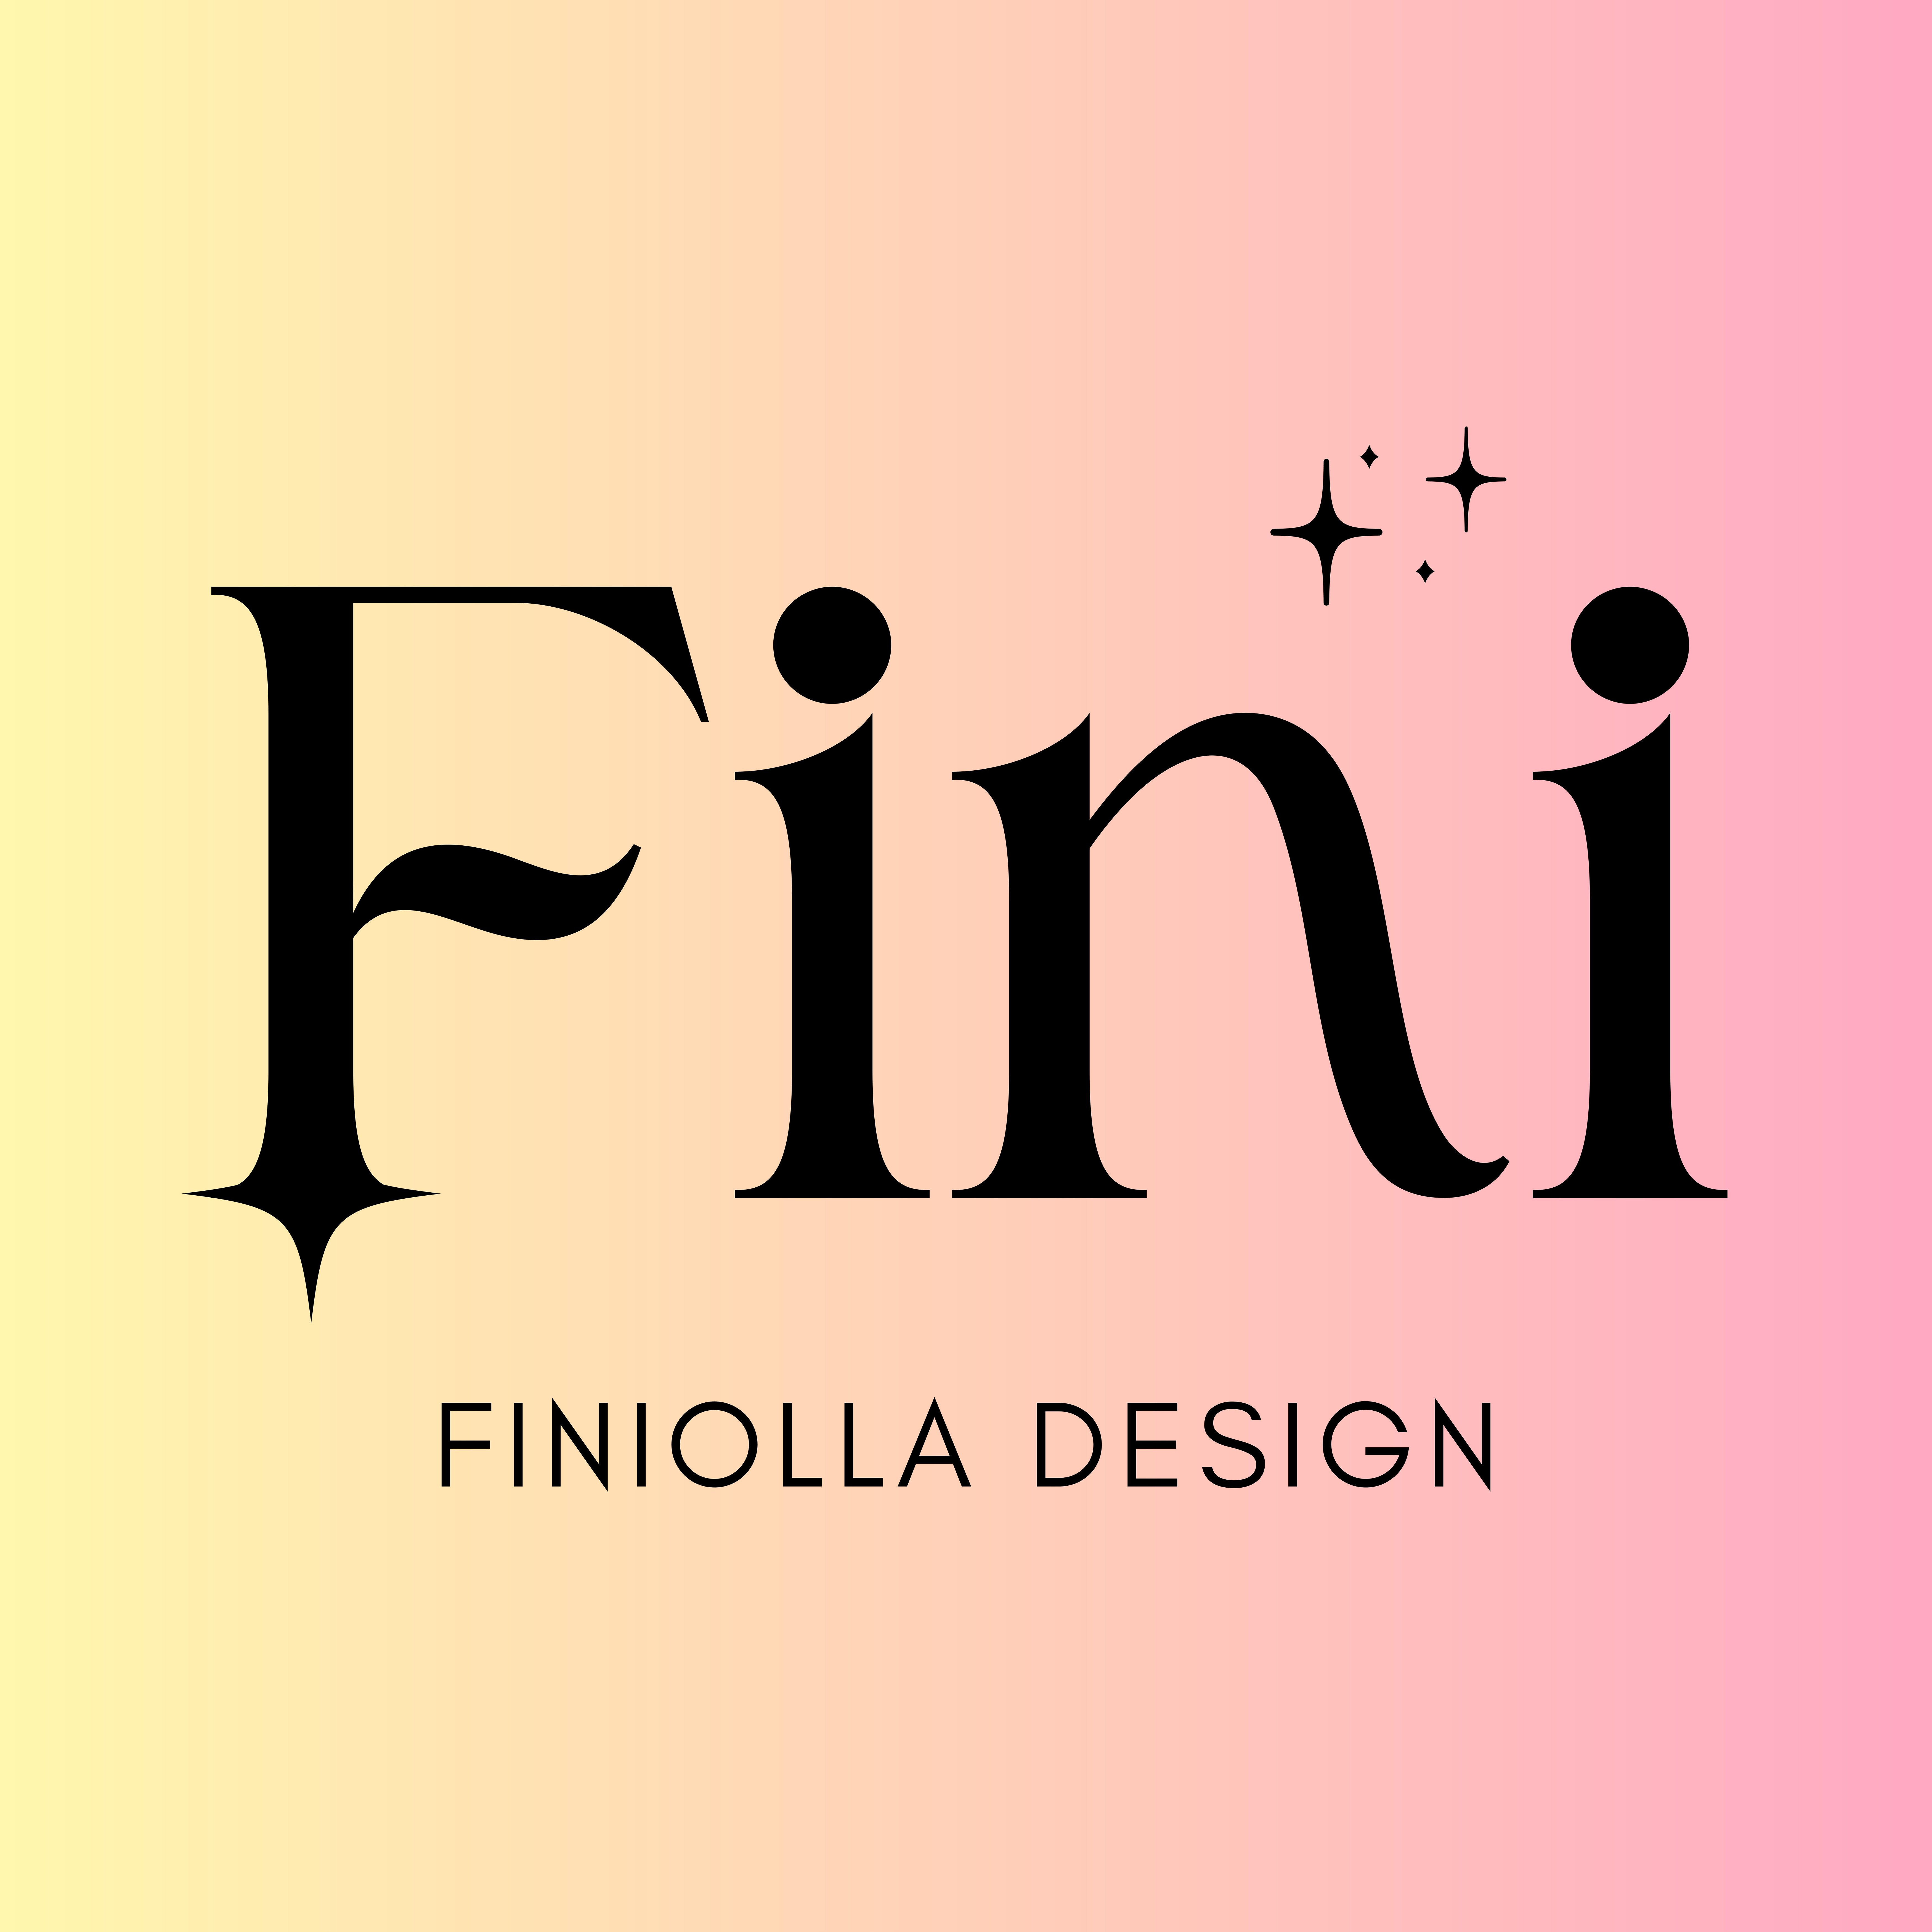 Finiolla Design - zdjÄcie profilowe